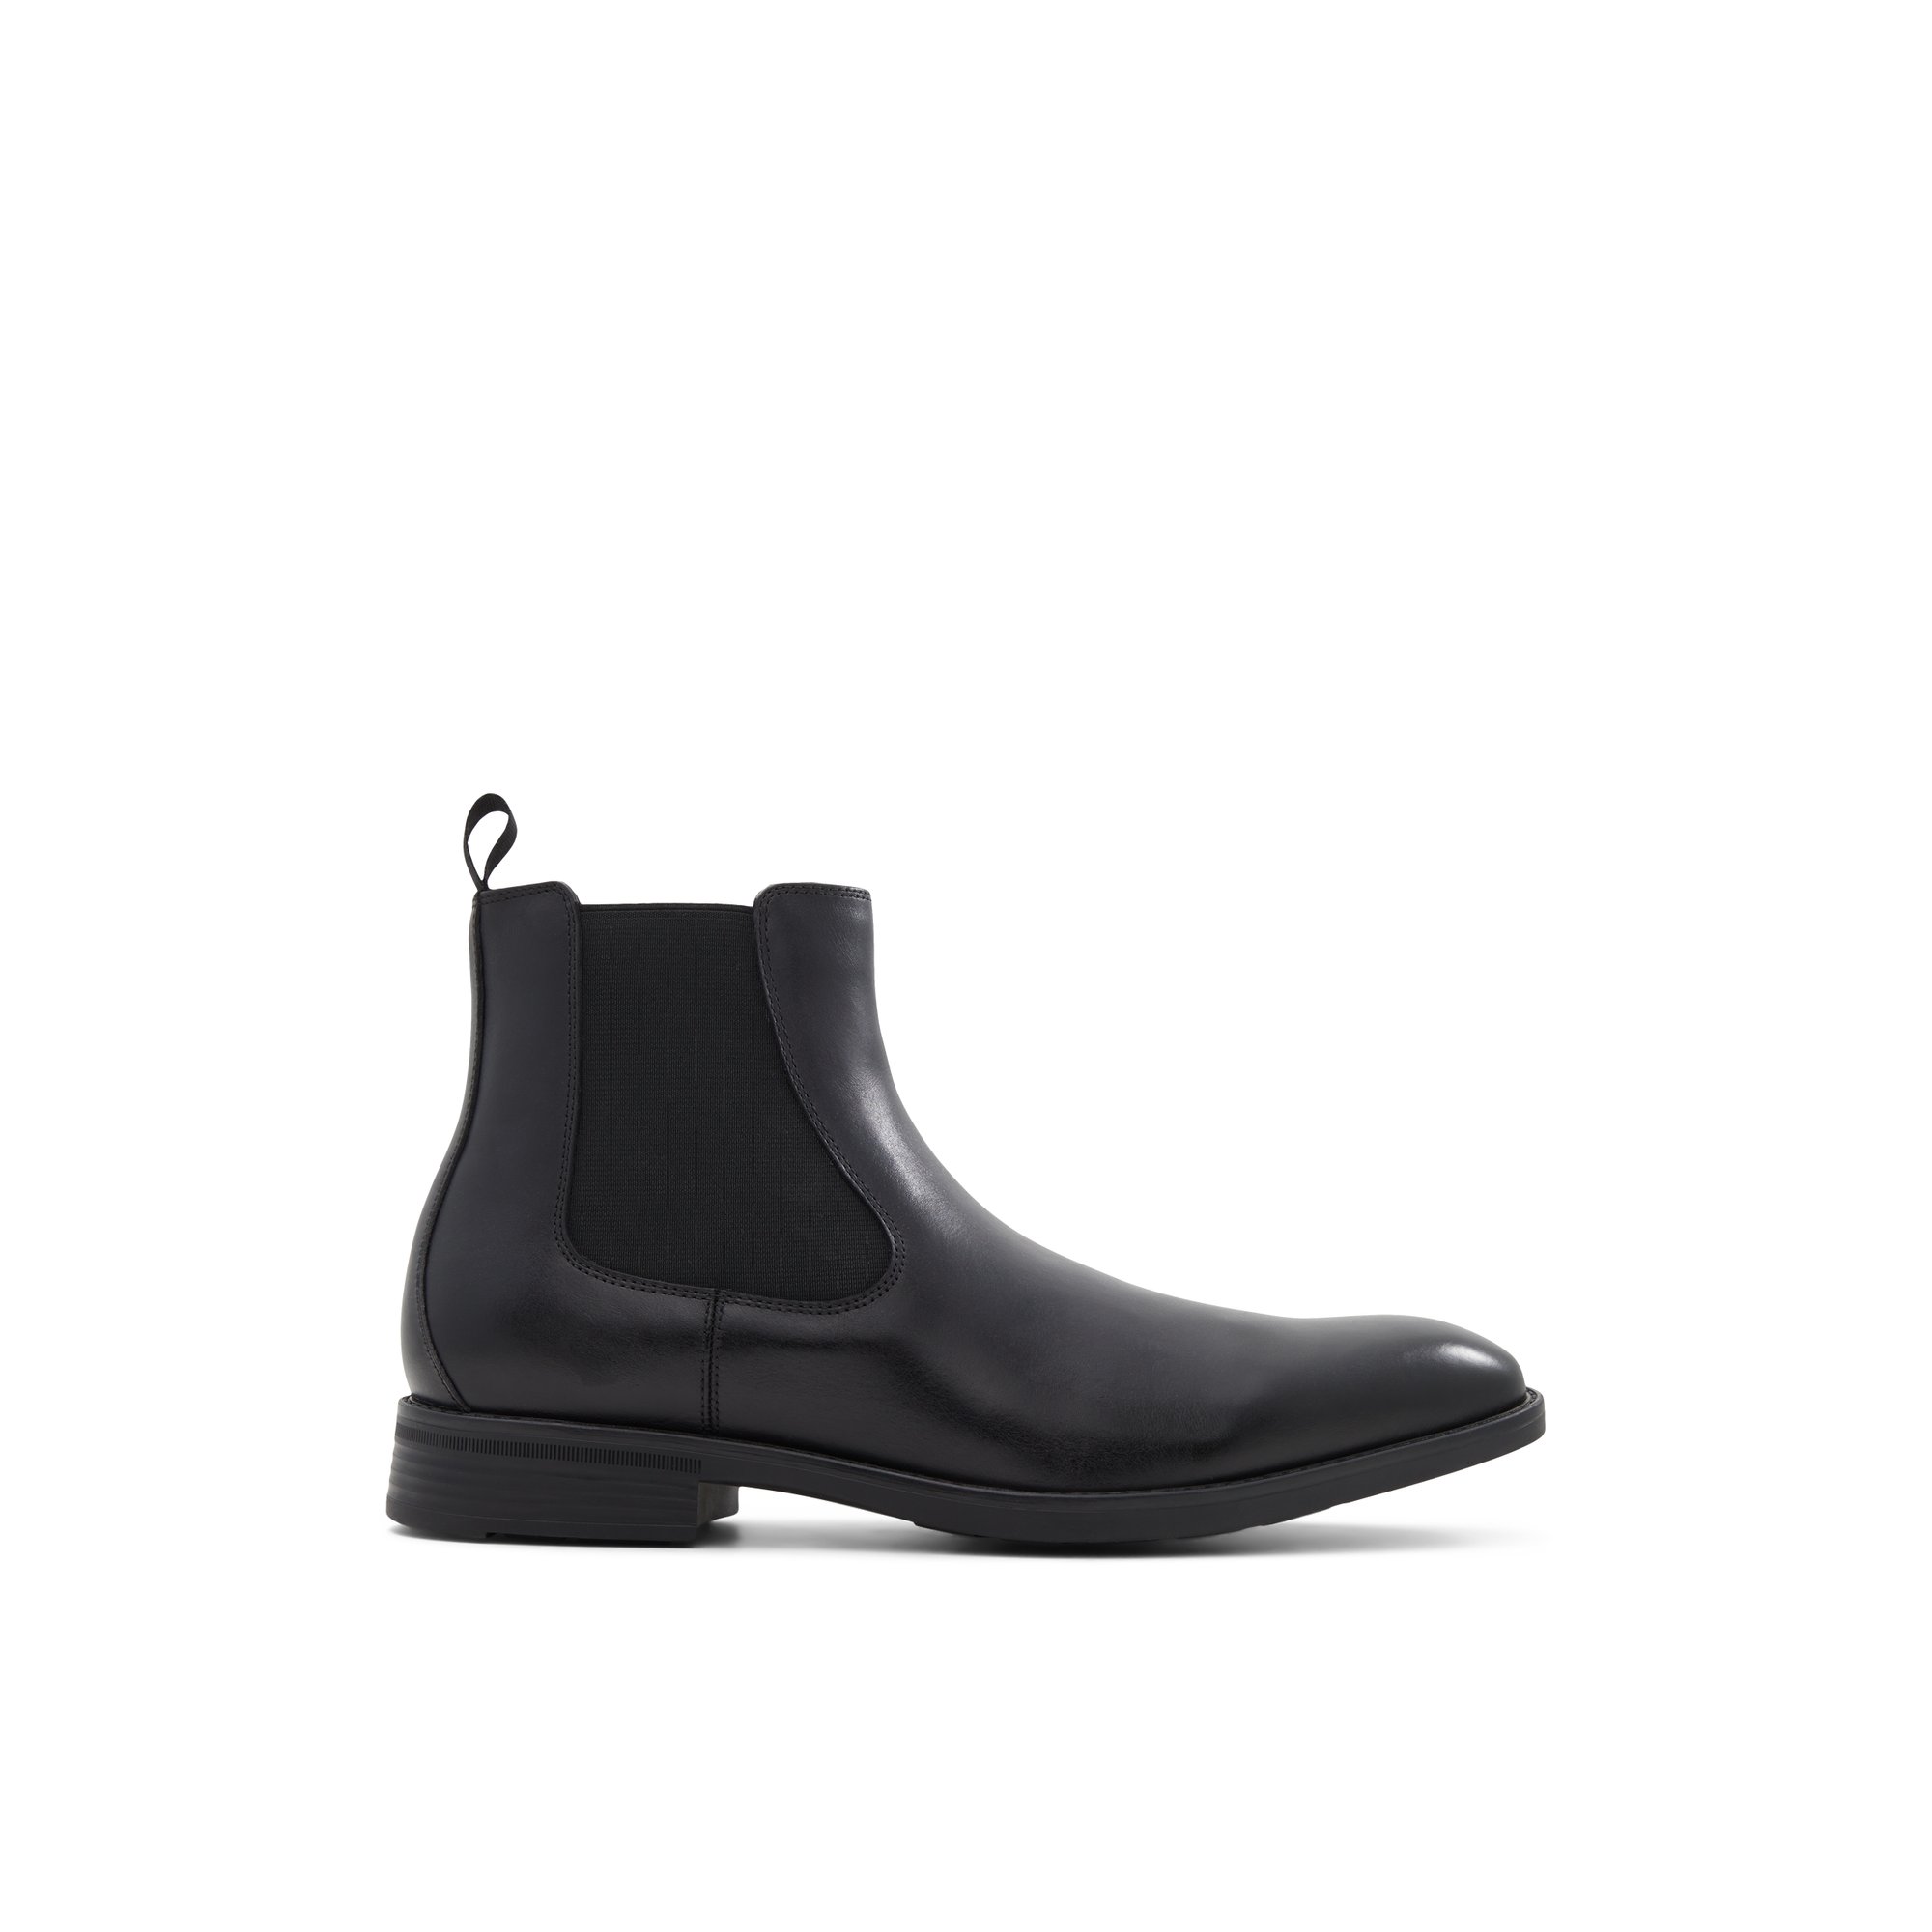 ALDO Chambers - Men's Boots Dress - Black